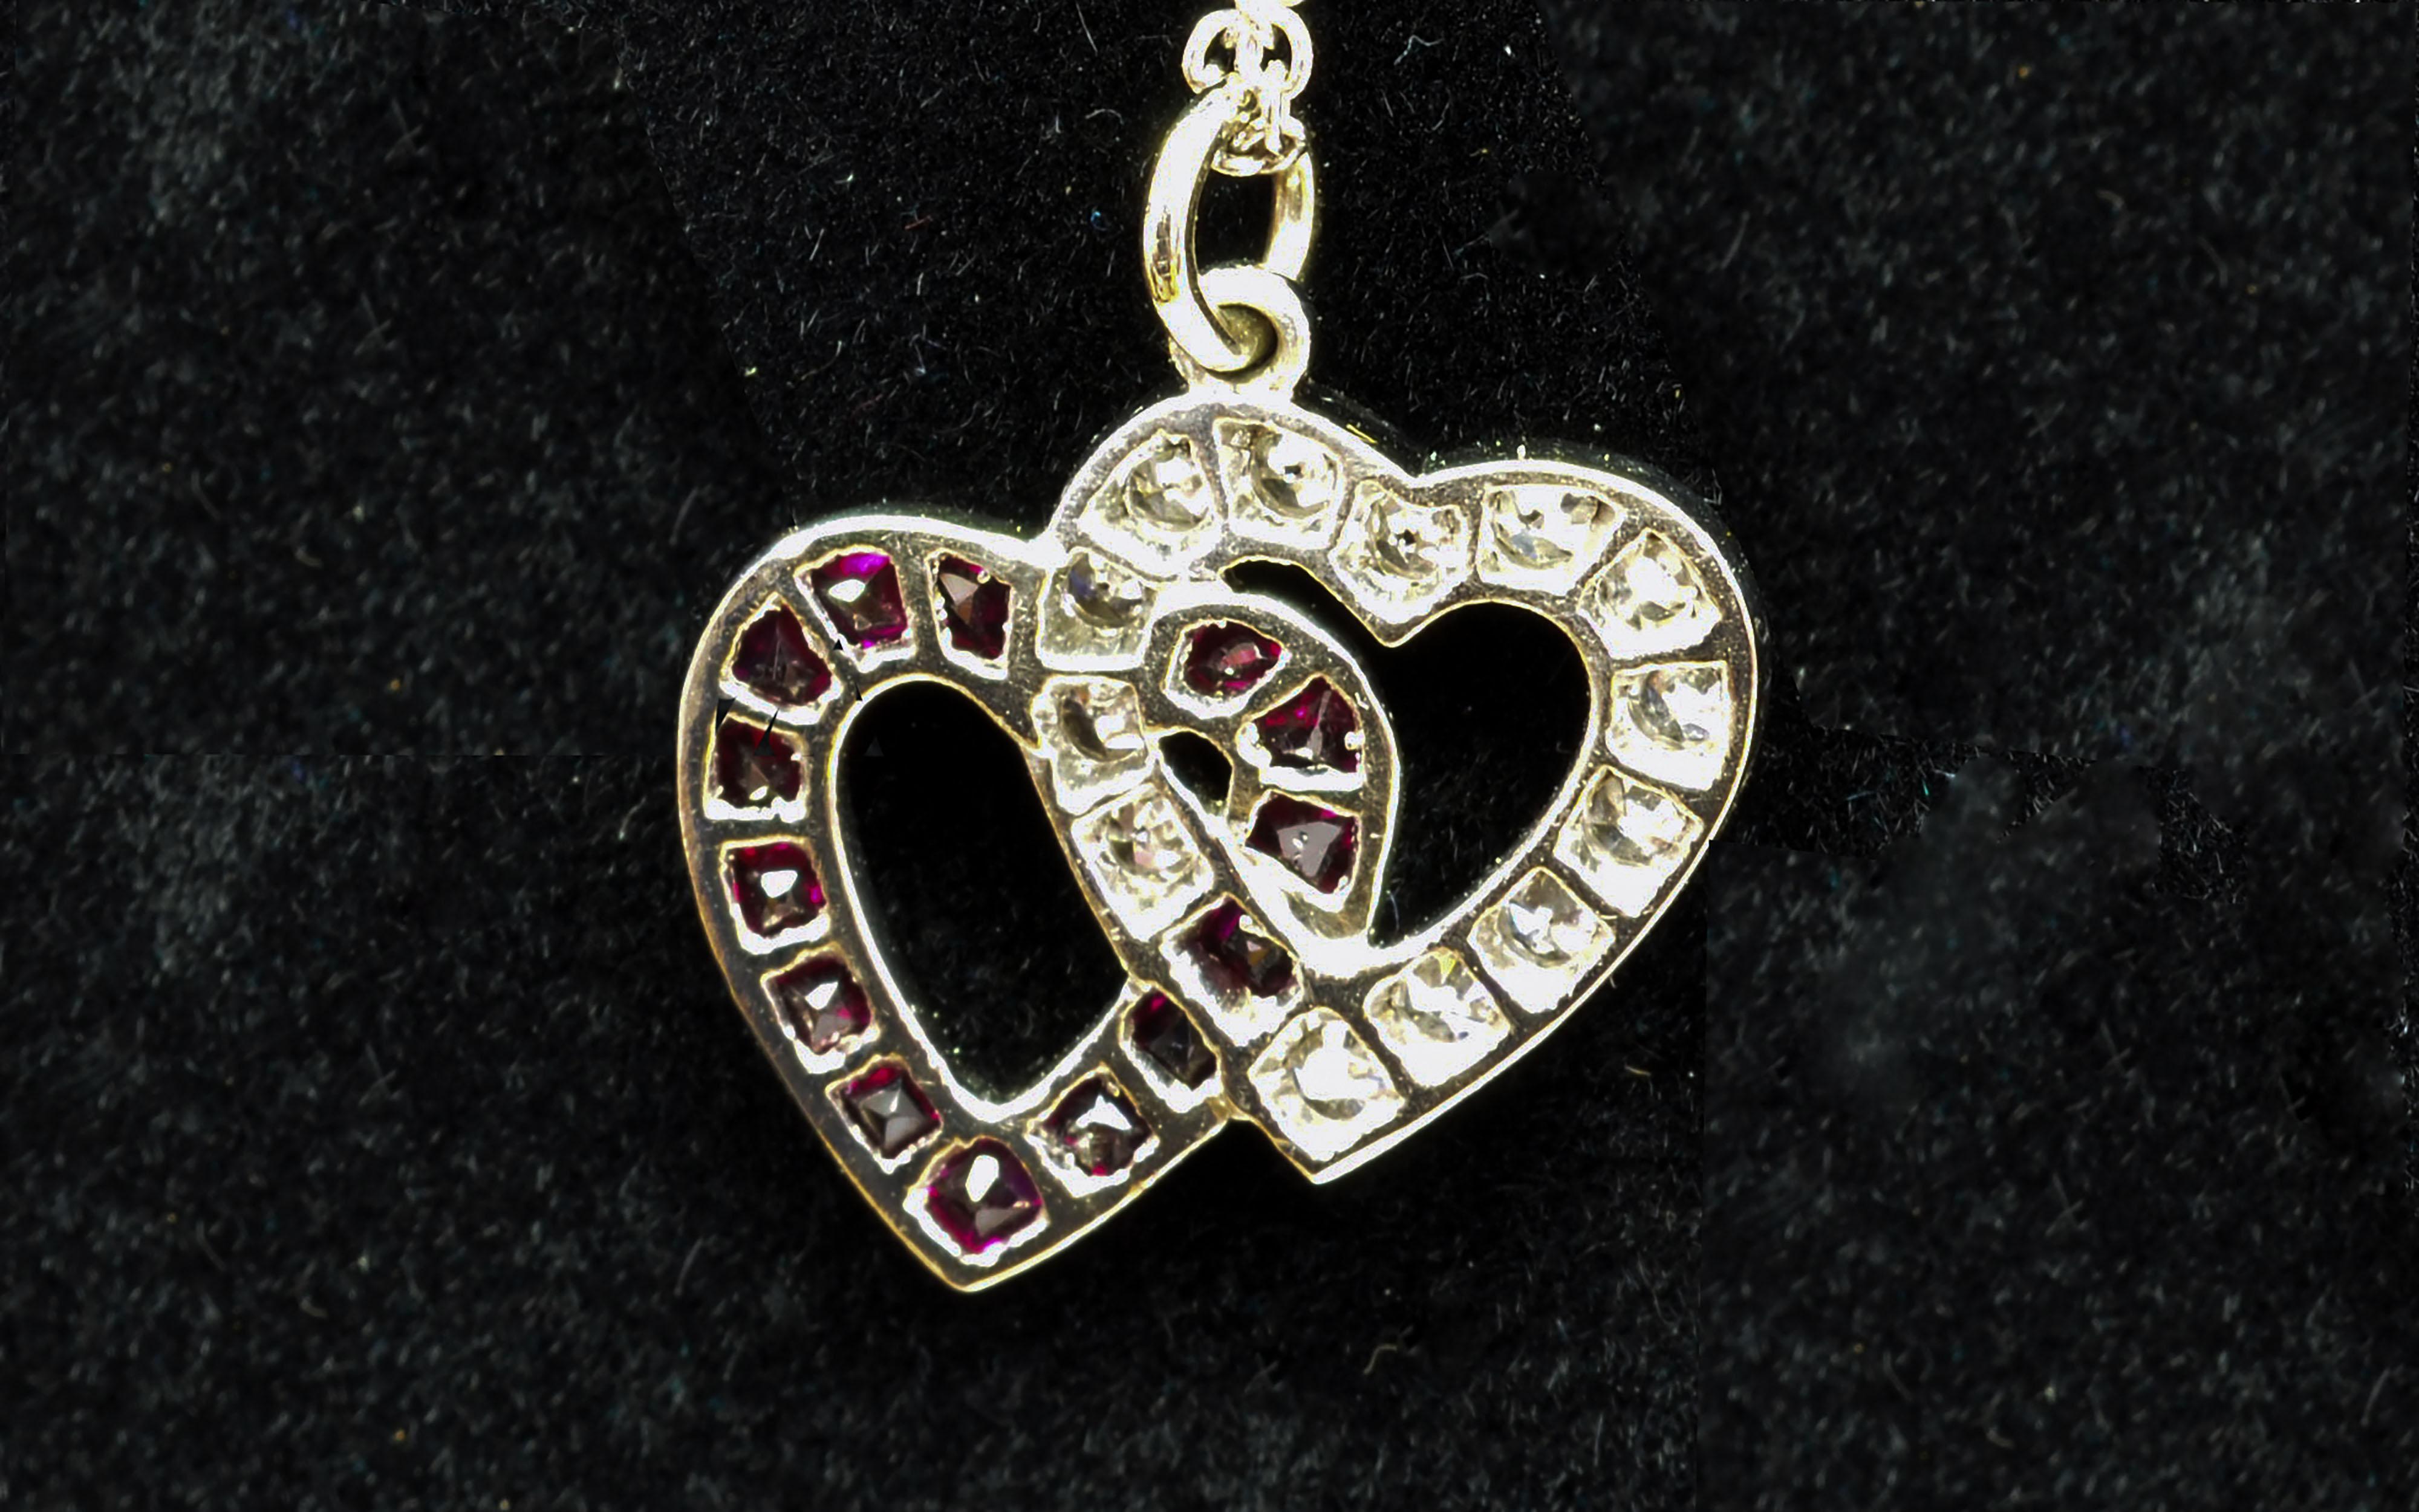 Artisan Platinum Diamond Double Heart Pendant on a White Gold Chain, J.E.Caldwell Co. For Sale